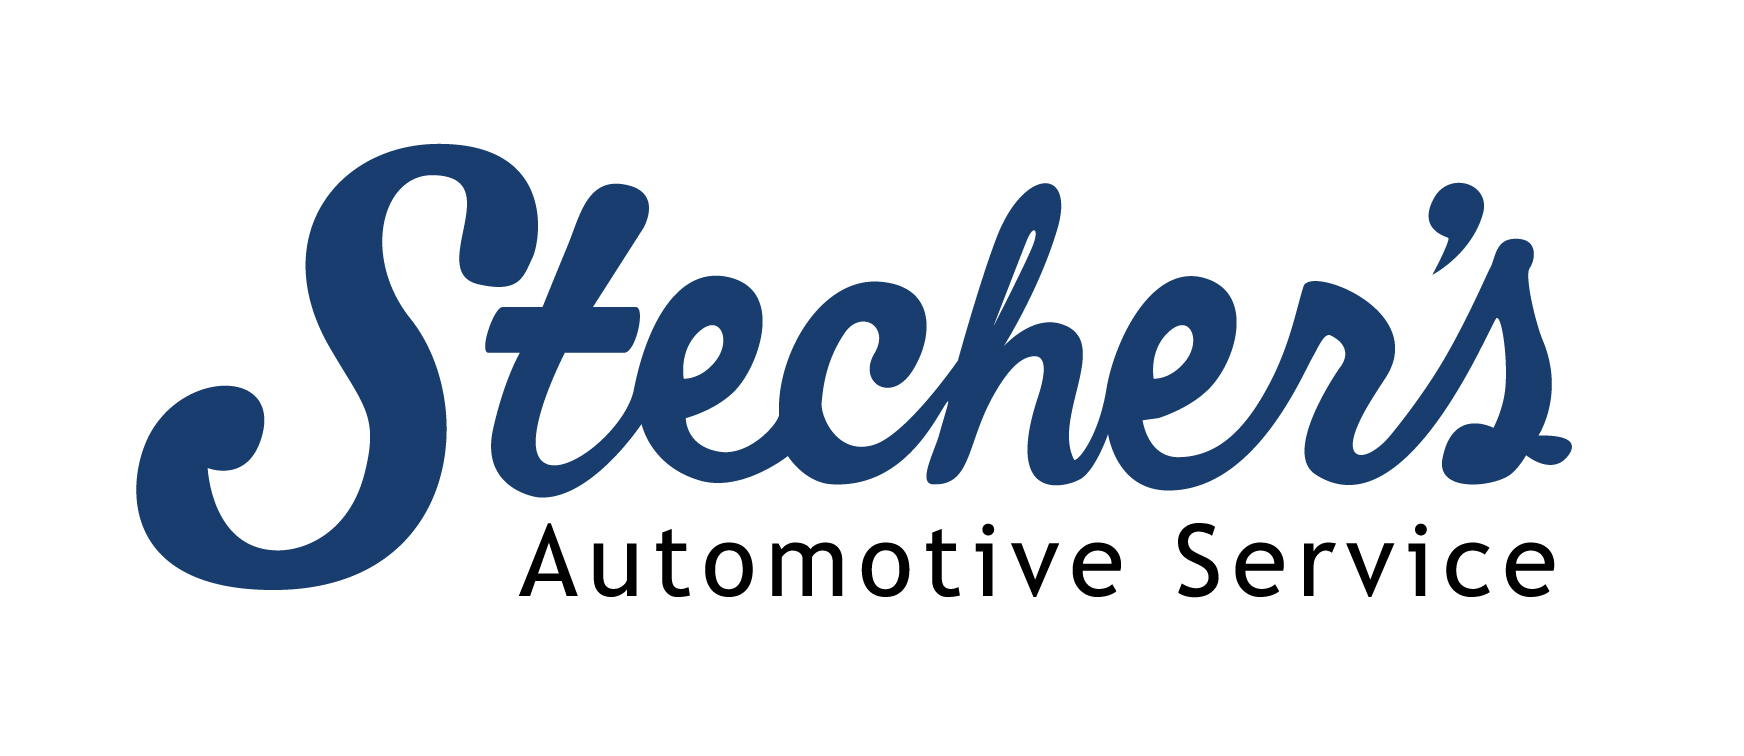 stecher's logo